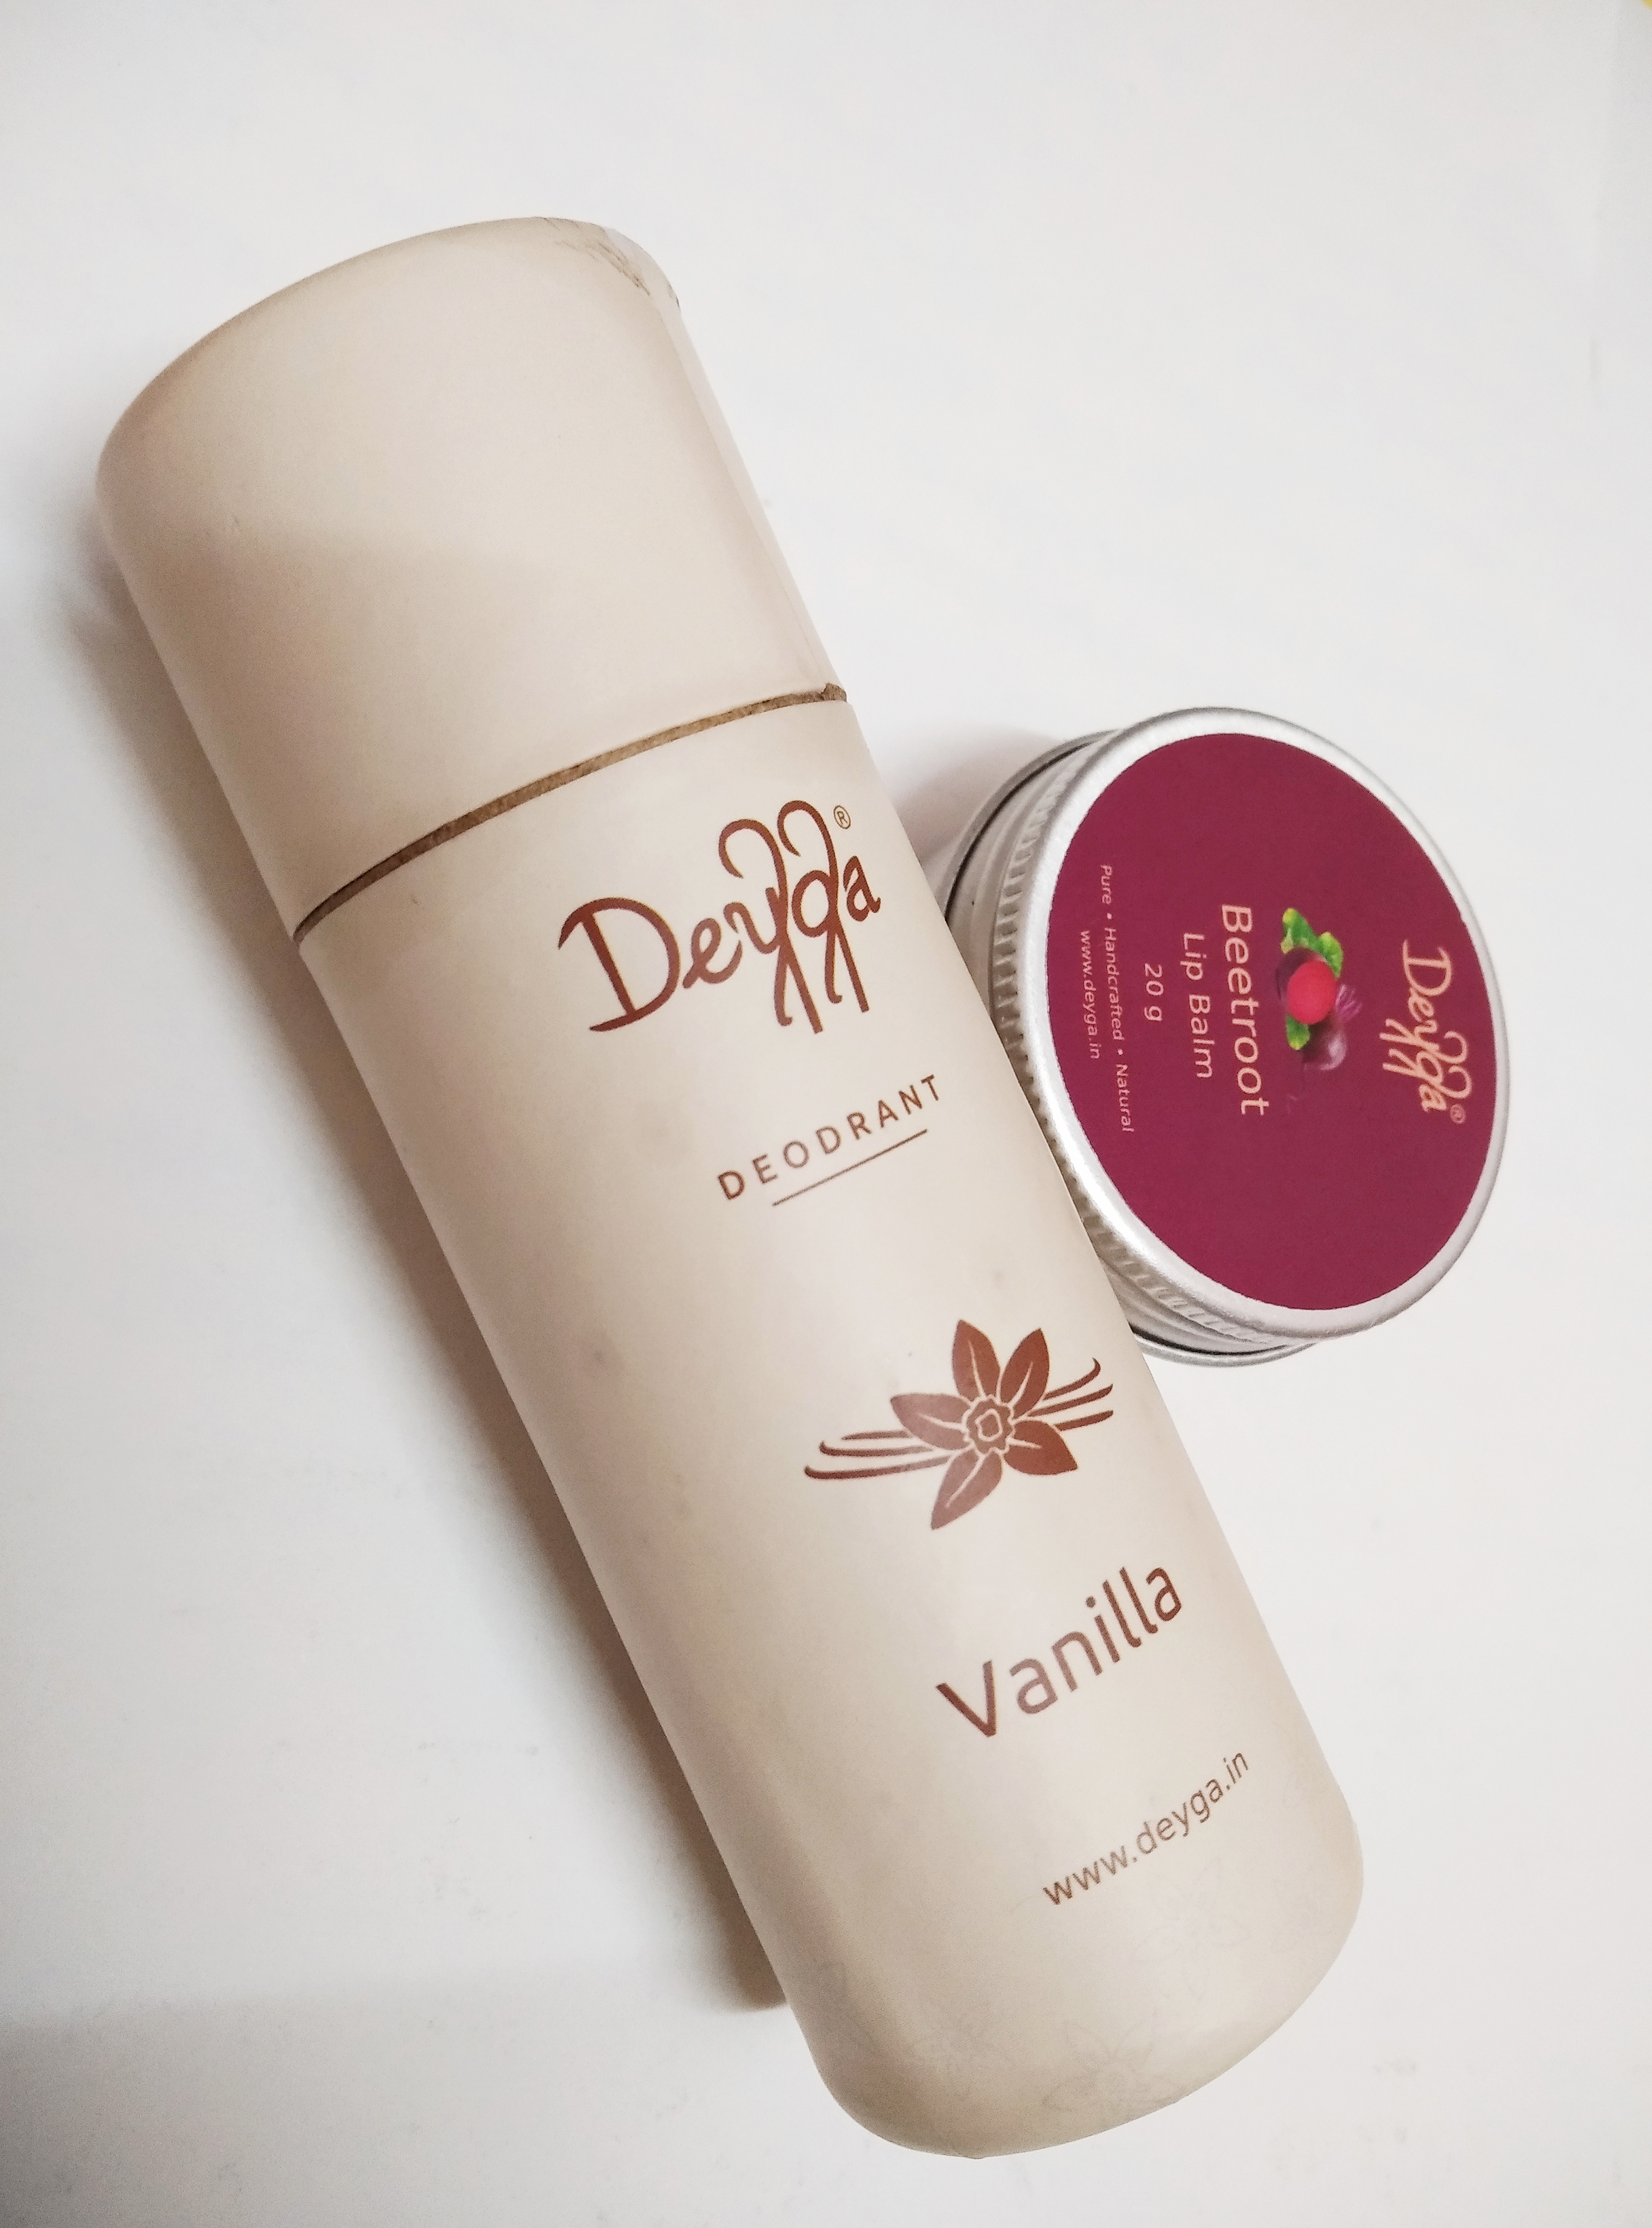 Deyga Beetroot Lip Balm and Vanilla Deodorant Review!